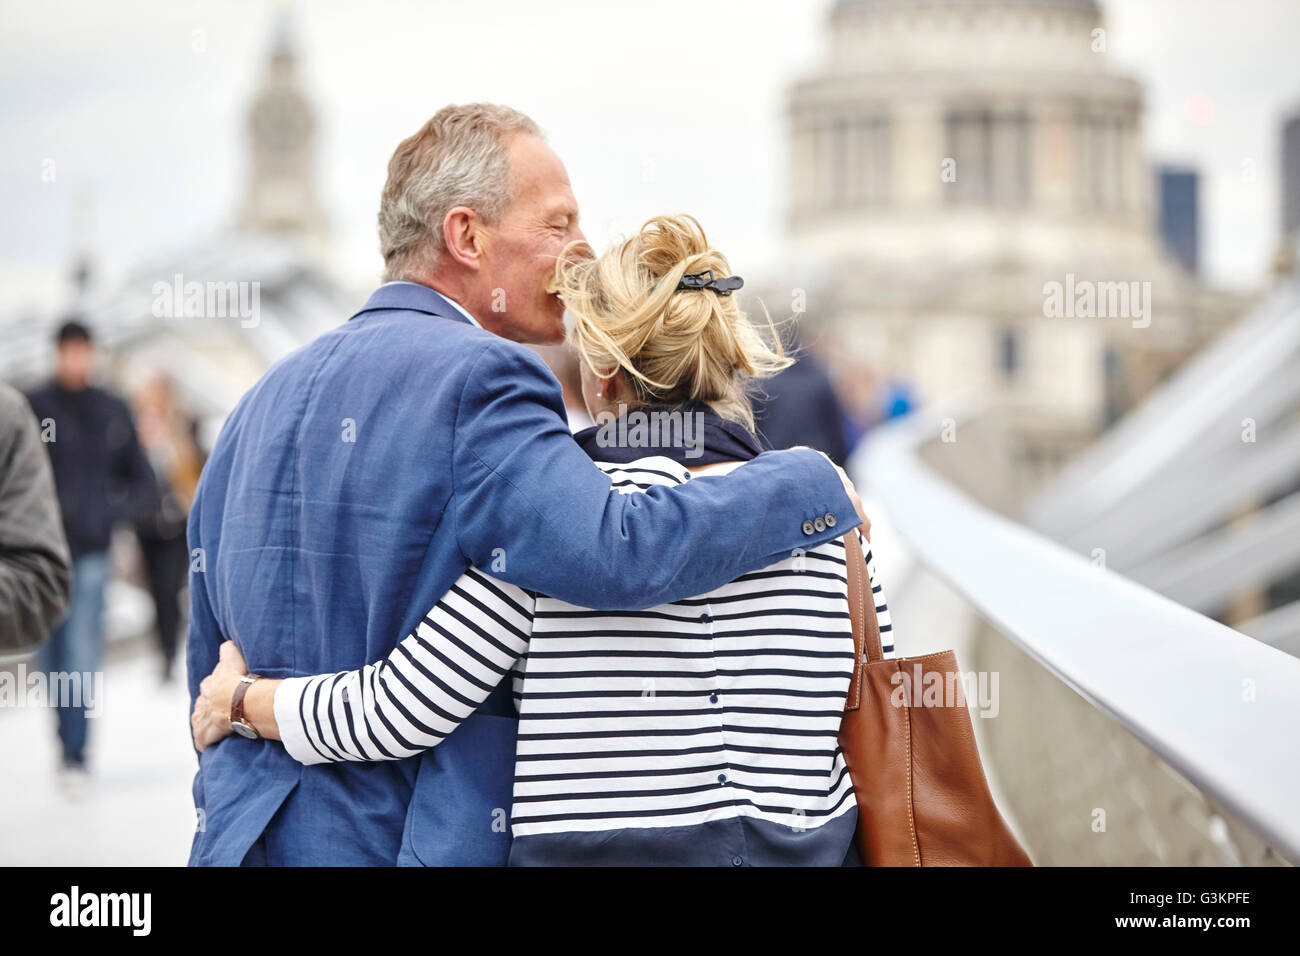 Rear view of romantic mature dating couple crossing Millennium Bridge, London, UK Stock Photo